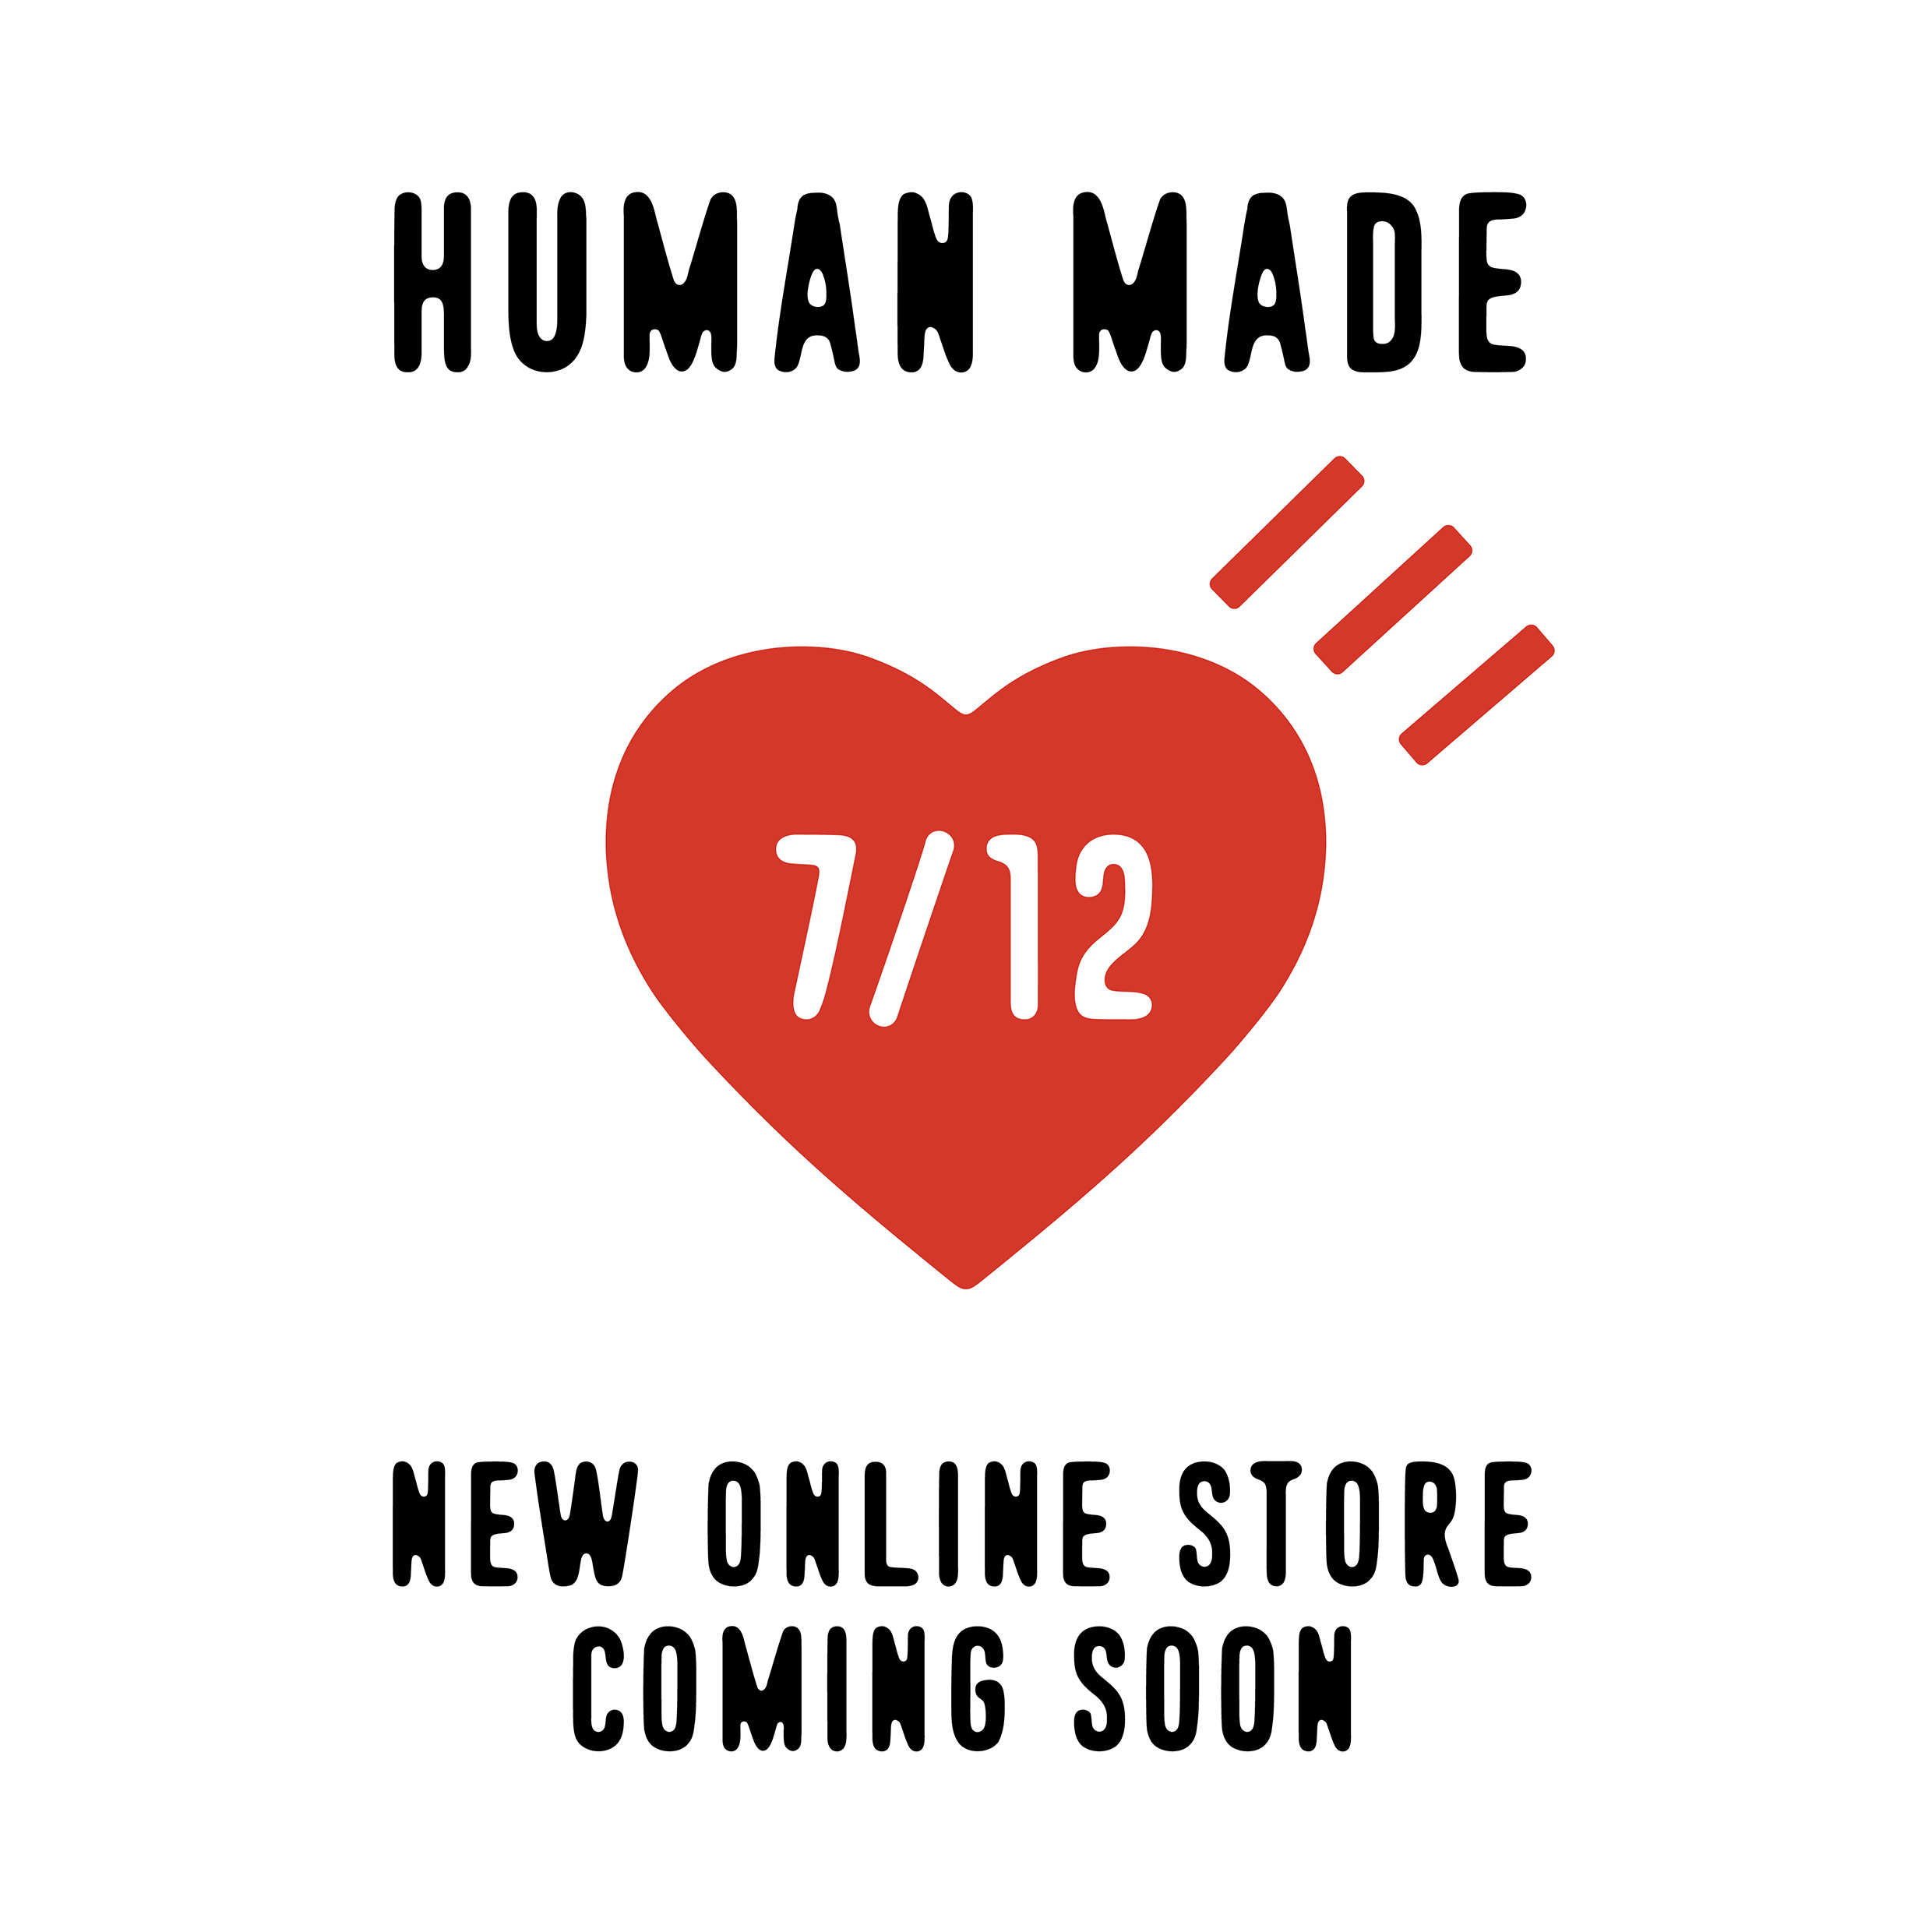 Human Made Online Store Renewal, NEWS